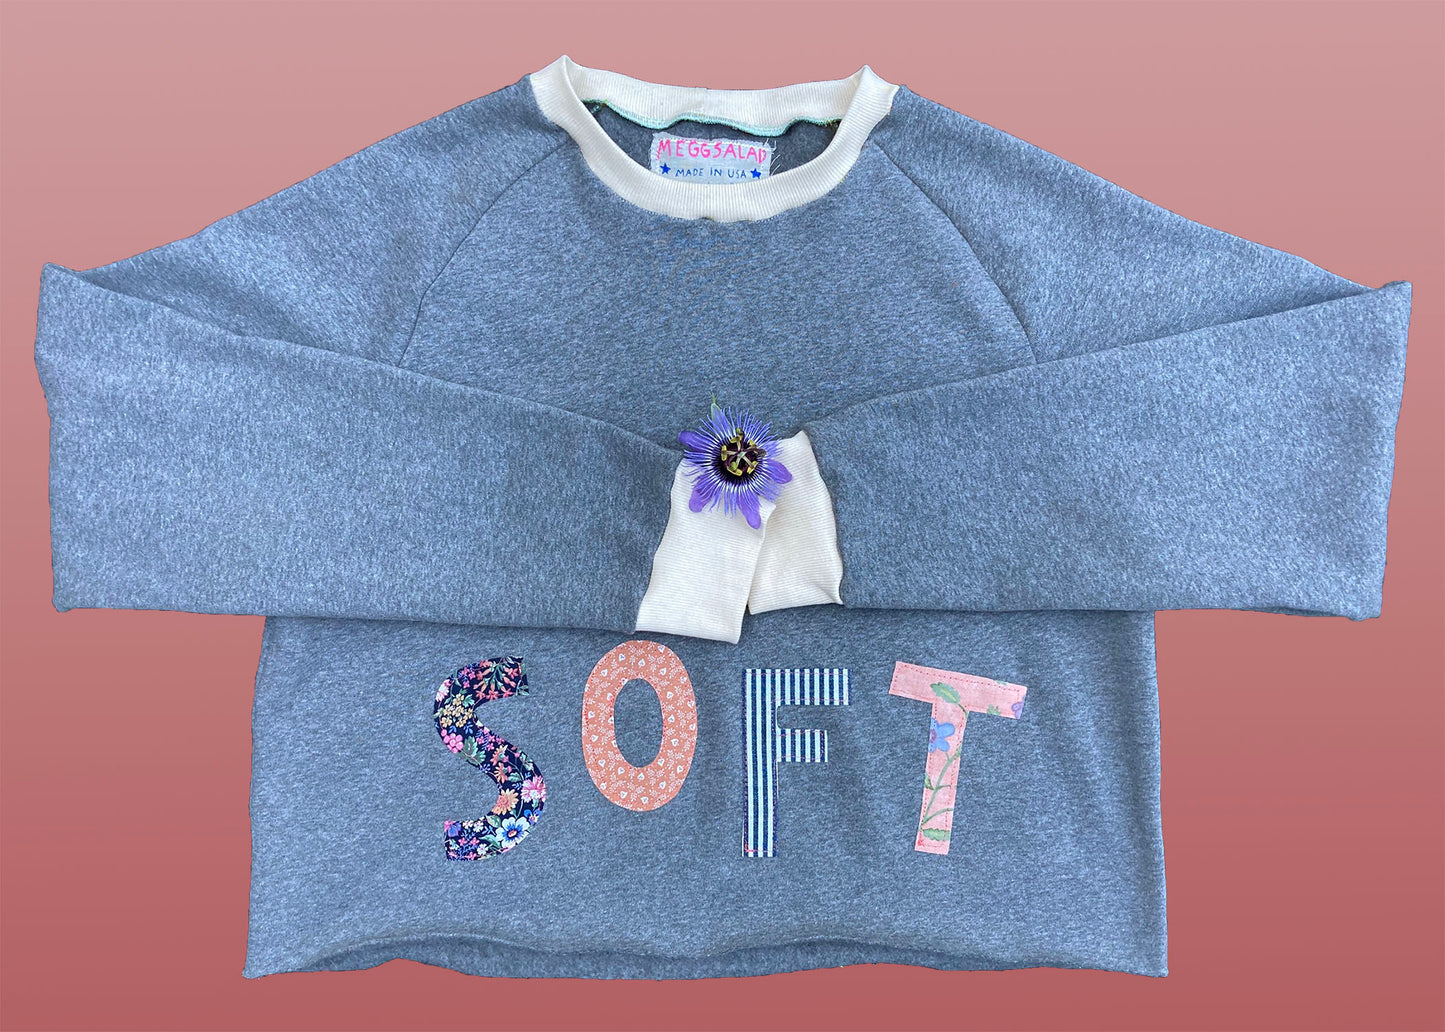 Soft Sweater